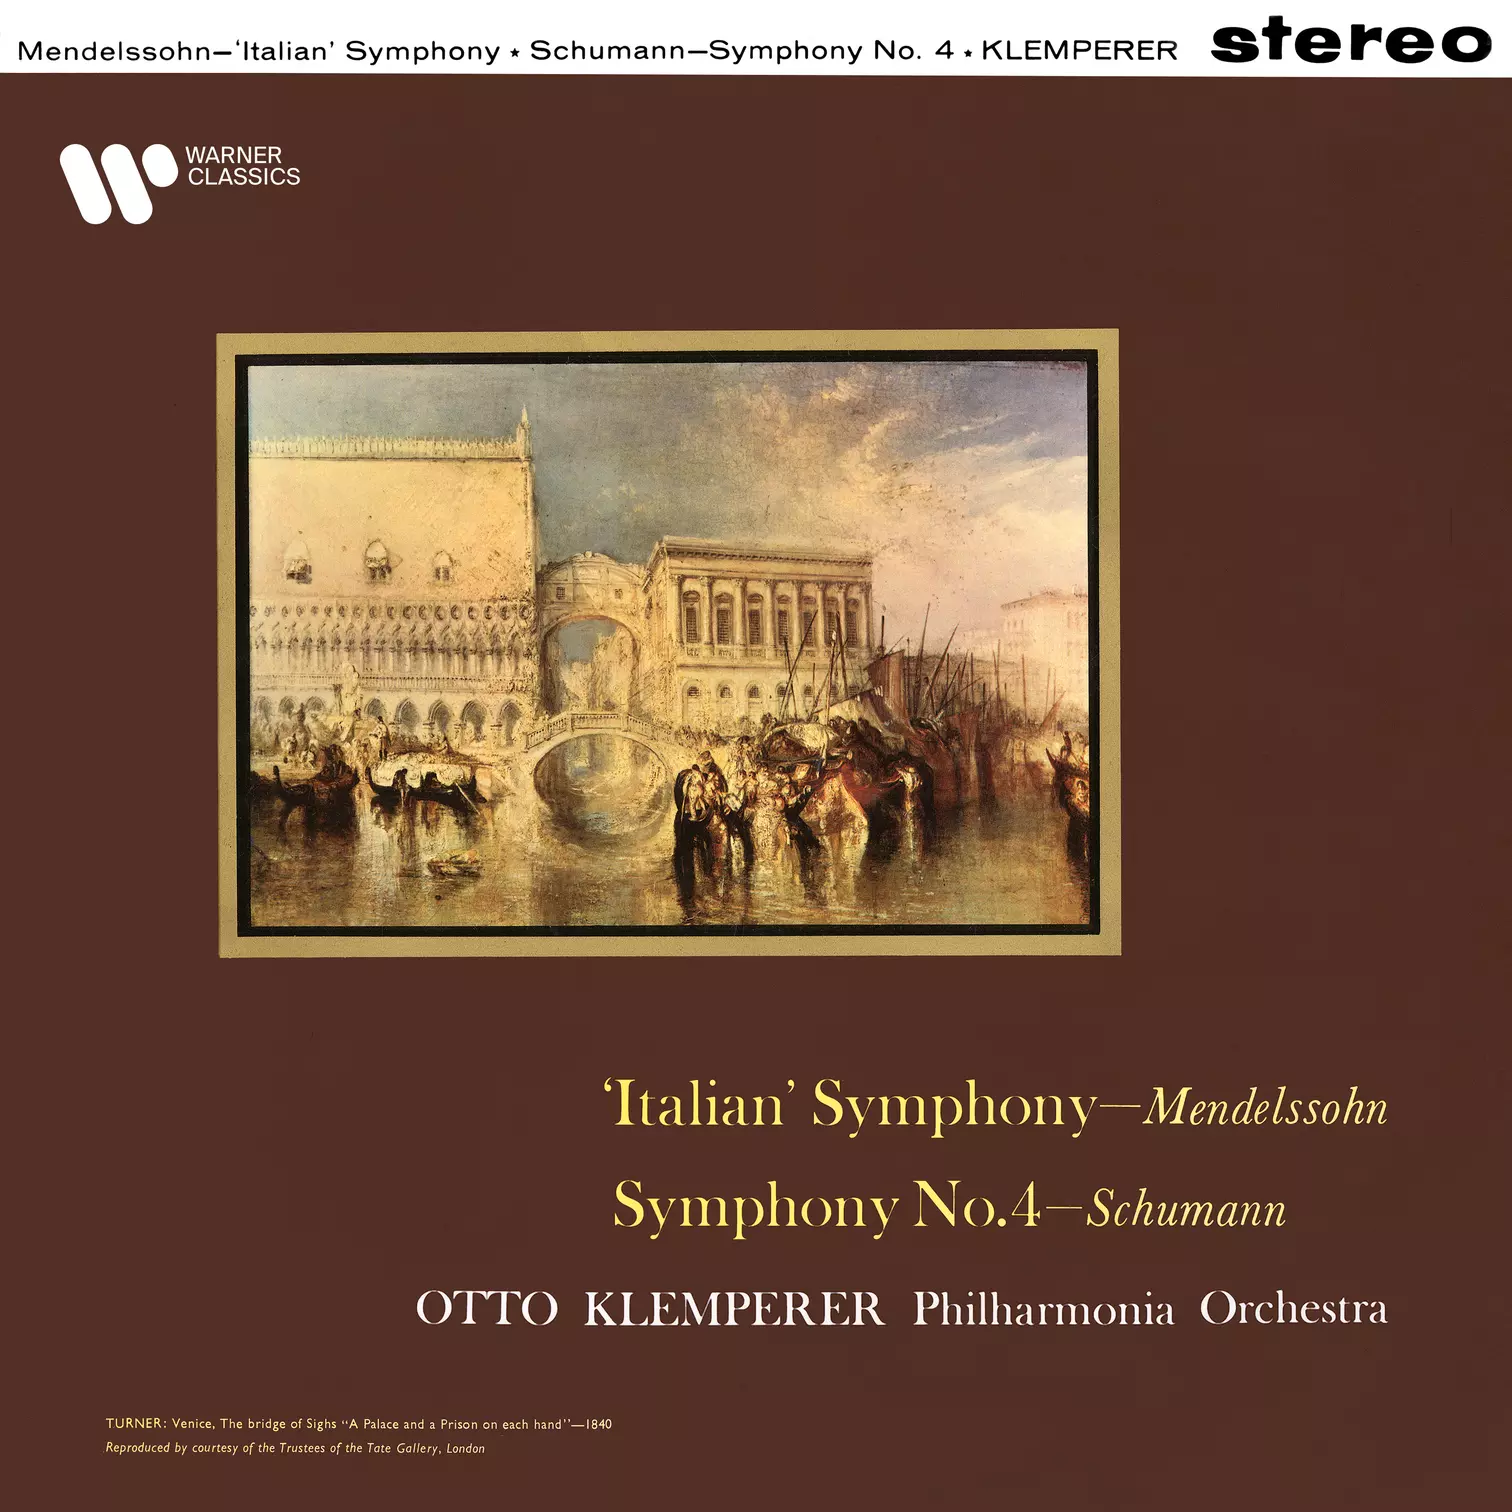 Mendelssohn: Symphony No. 4 "Italian" - Schumann: Symphony No. 4